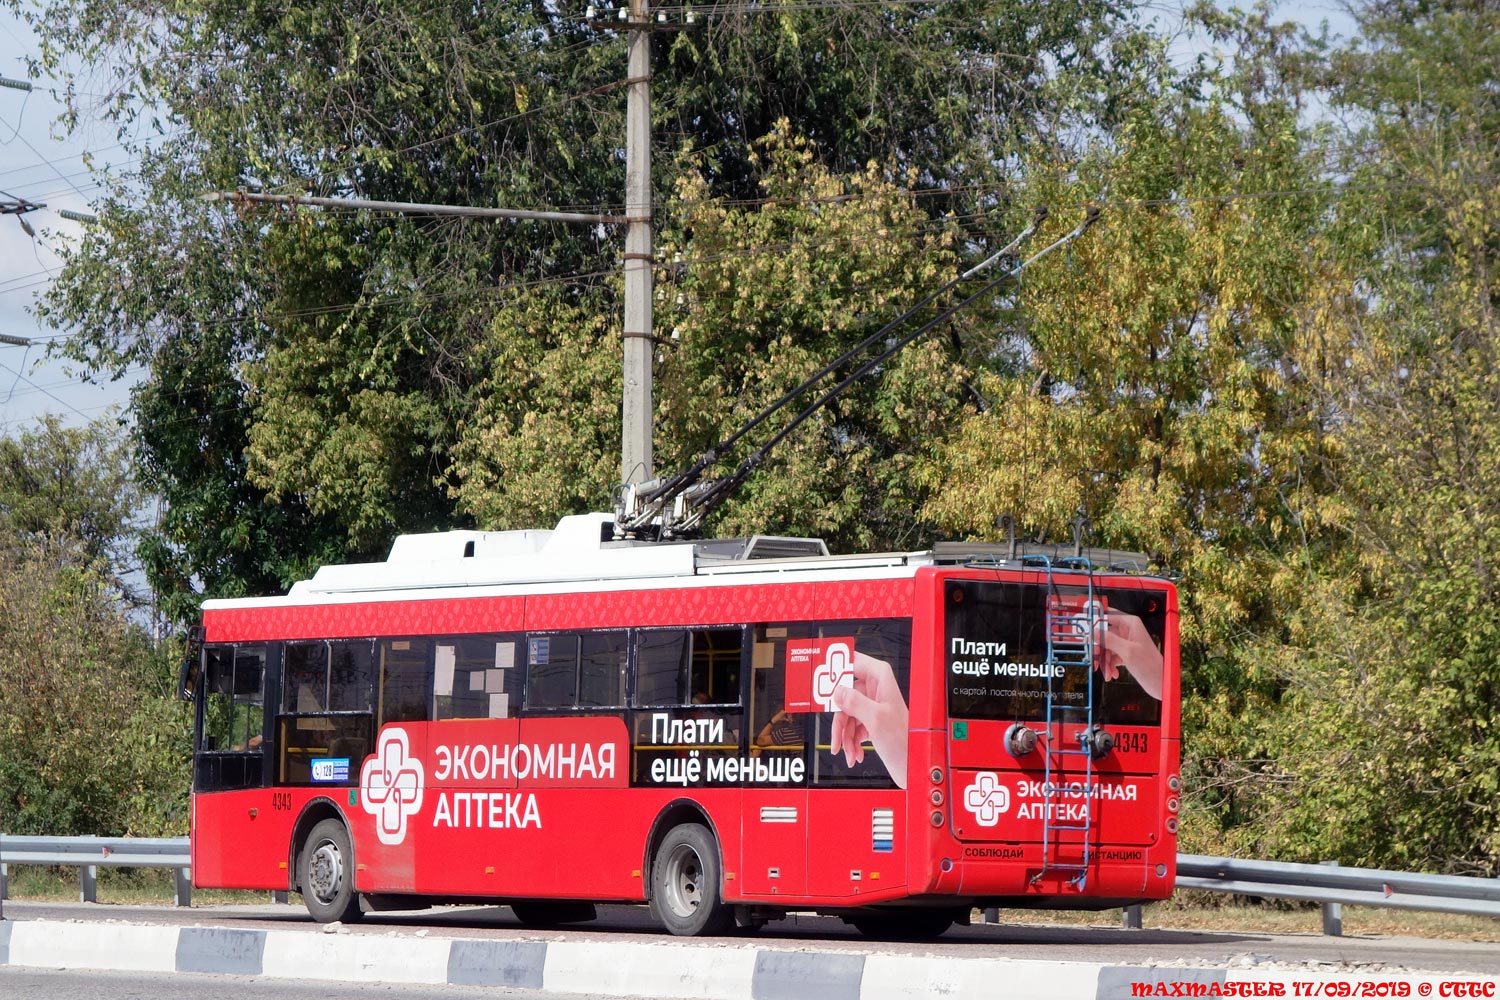 Крымский троллейбус, Богдан Т70110 № 4343